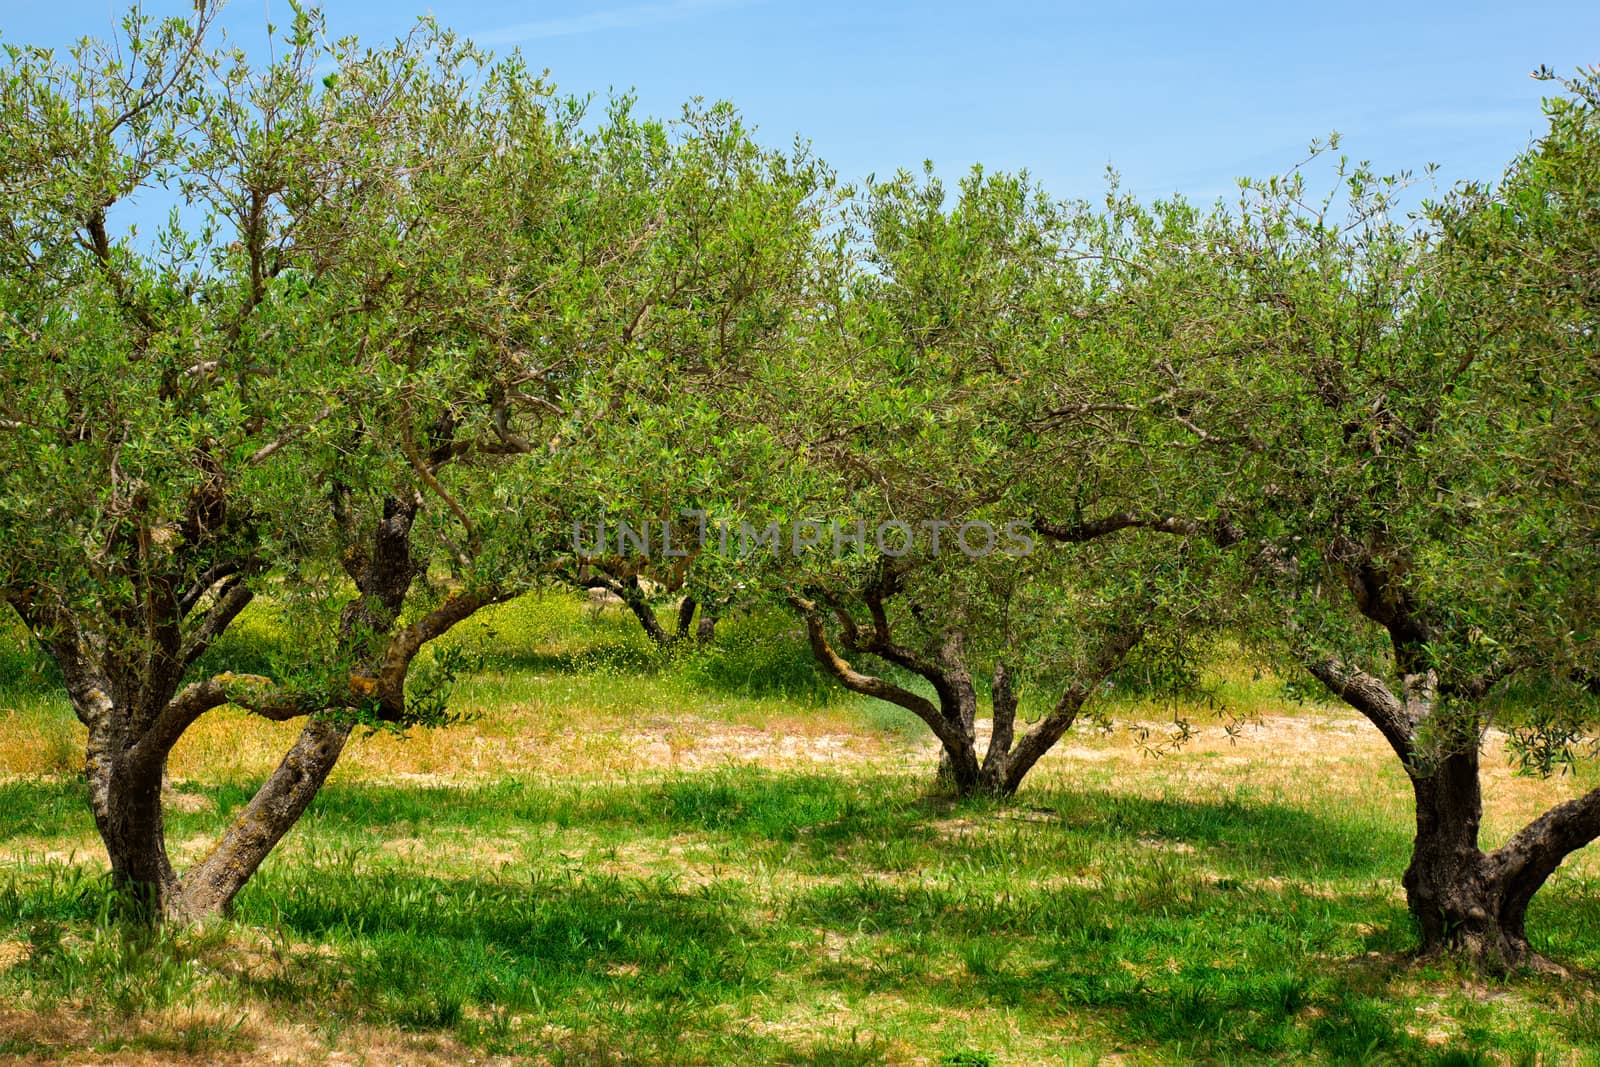 Olive trees (Olea europaea) grove in Crete, Greece for olive oil production. Horizontal camera pan